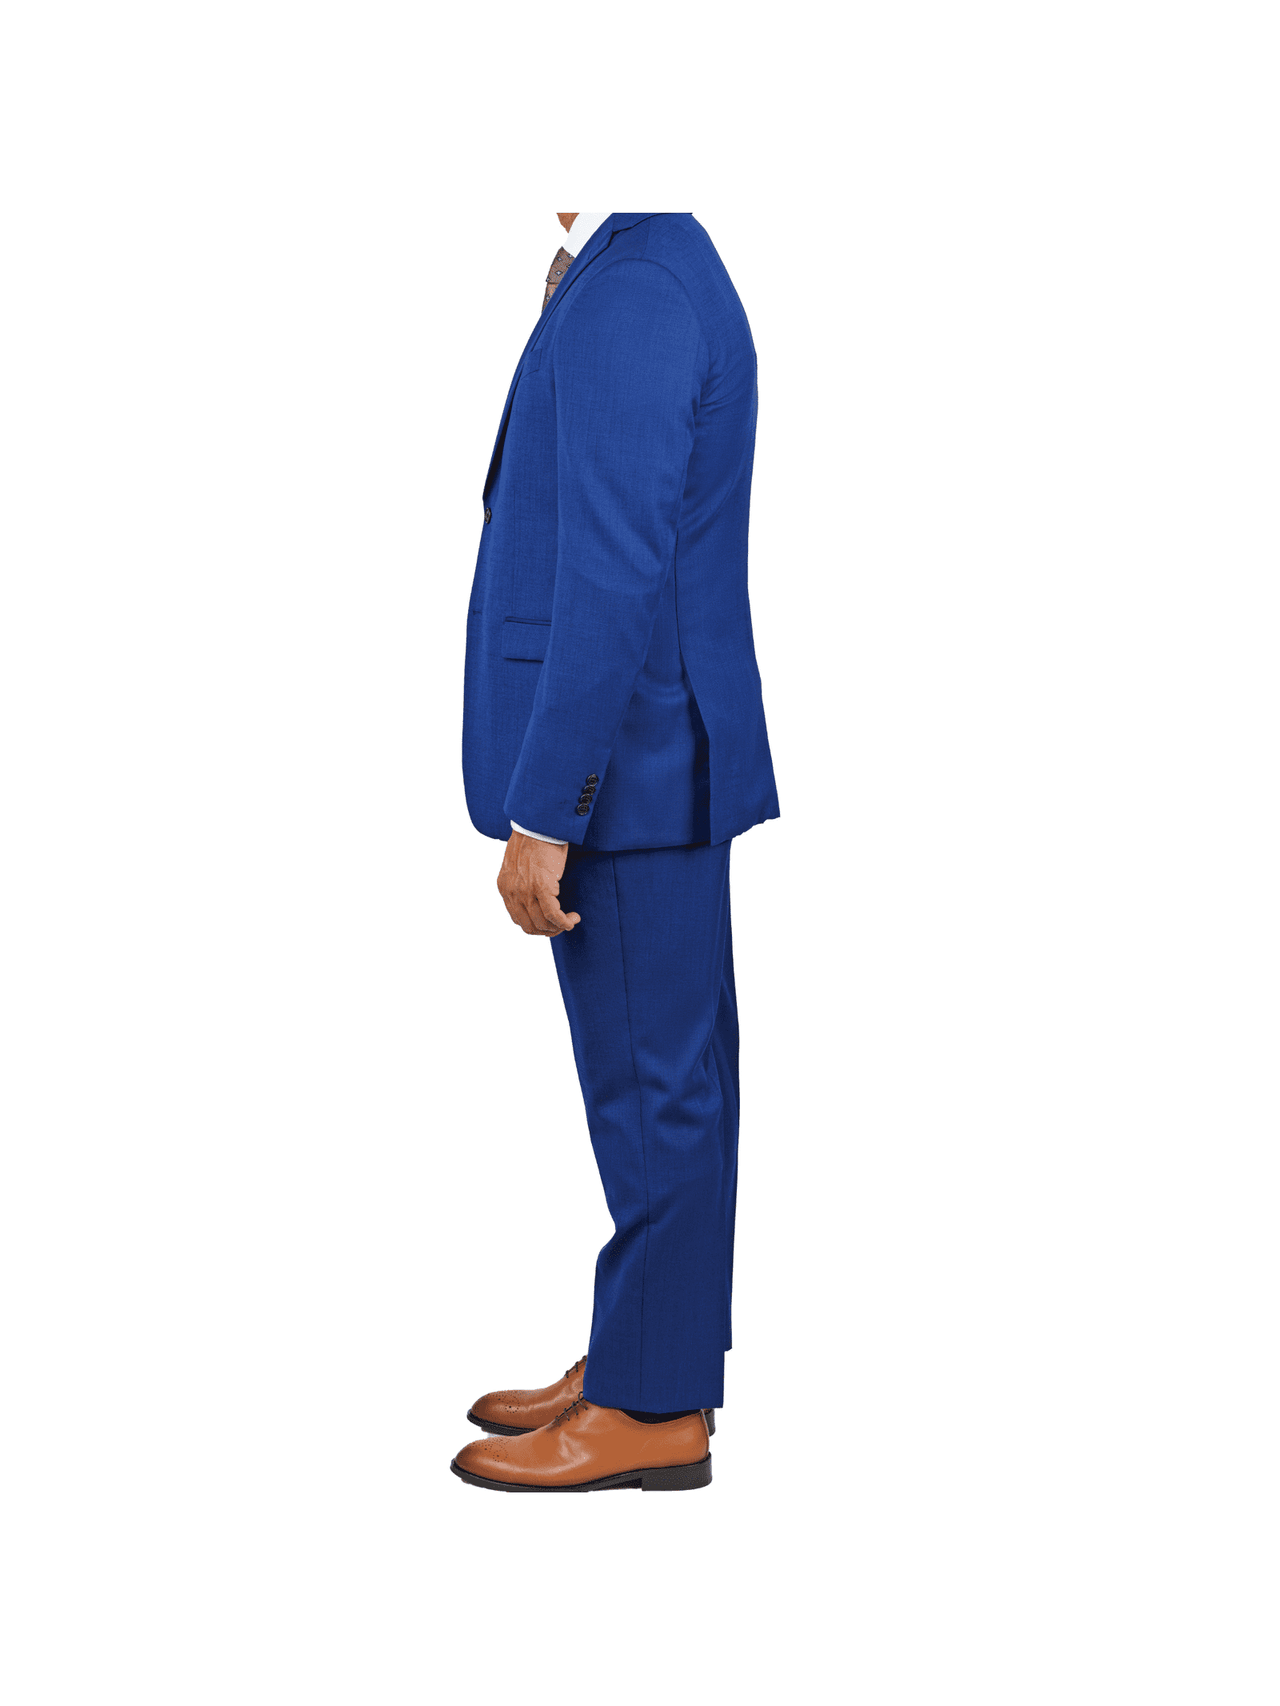 side view of John Varvatos blue slim fit suit